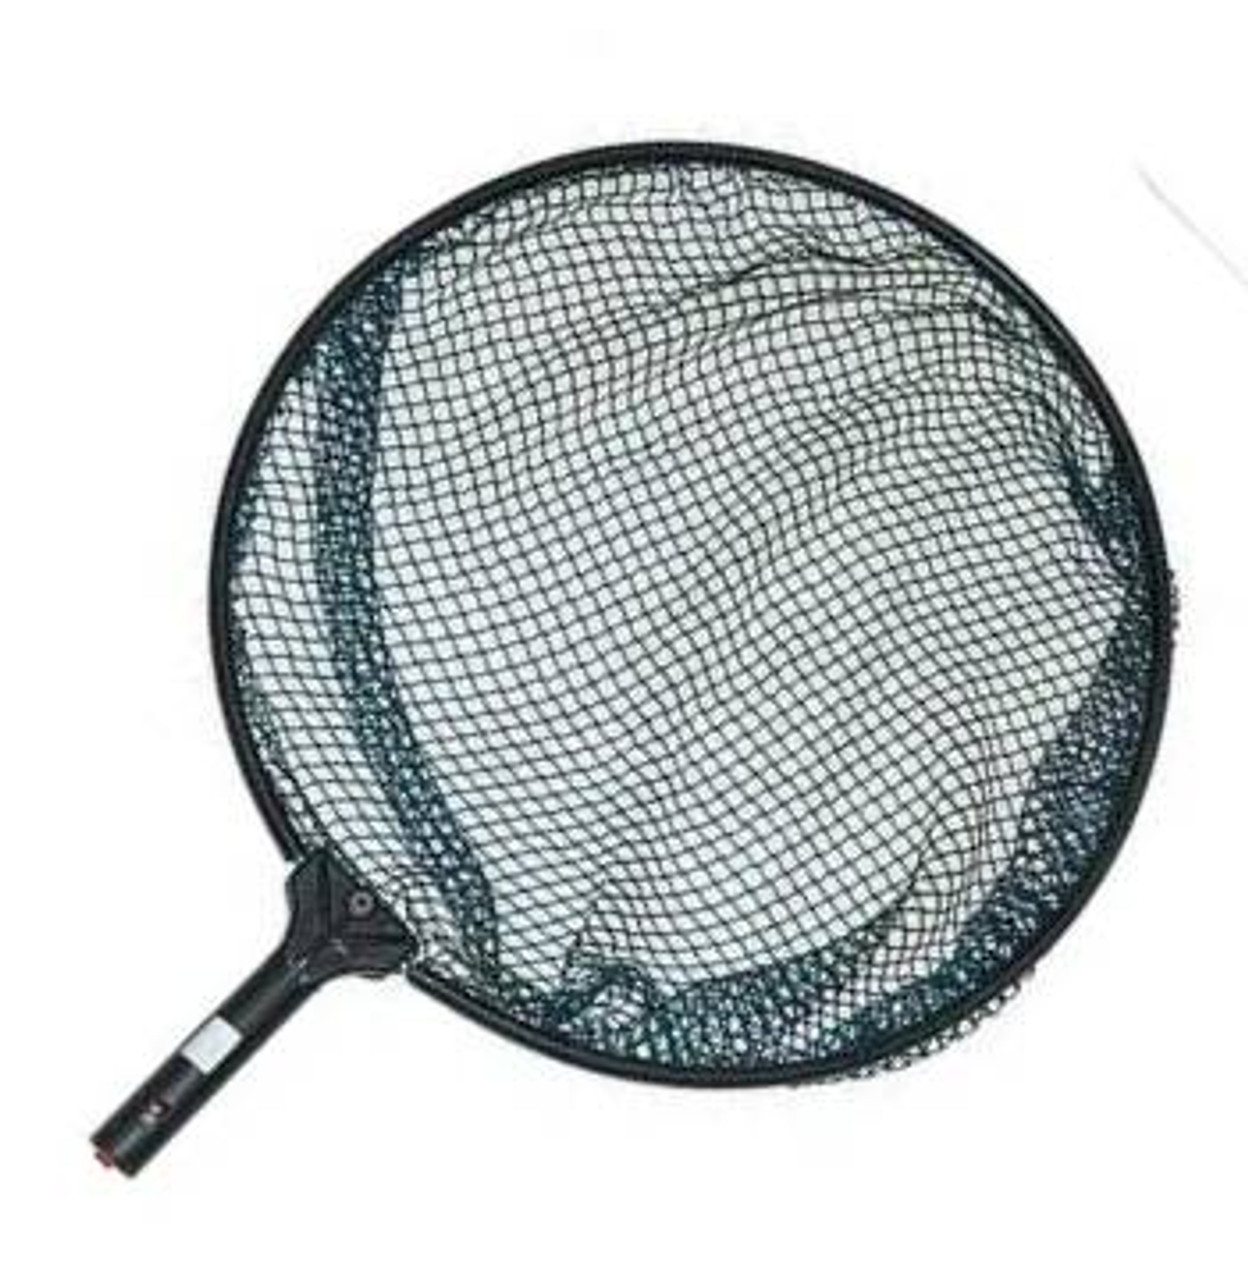 Small Round Fish net , for aquaponics, koi ponds and aquaculture